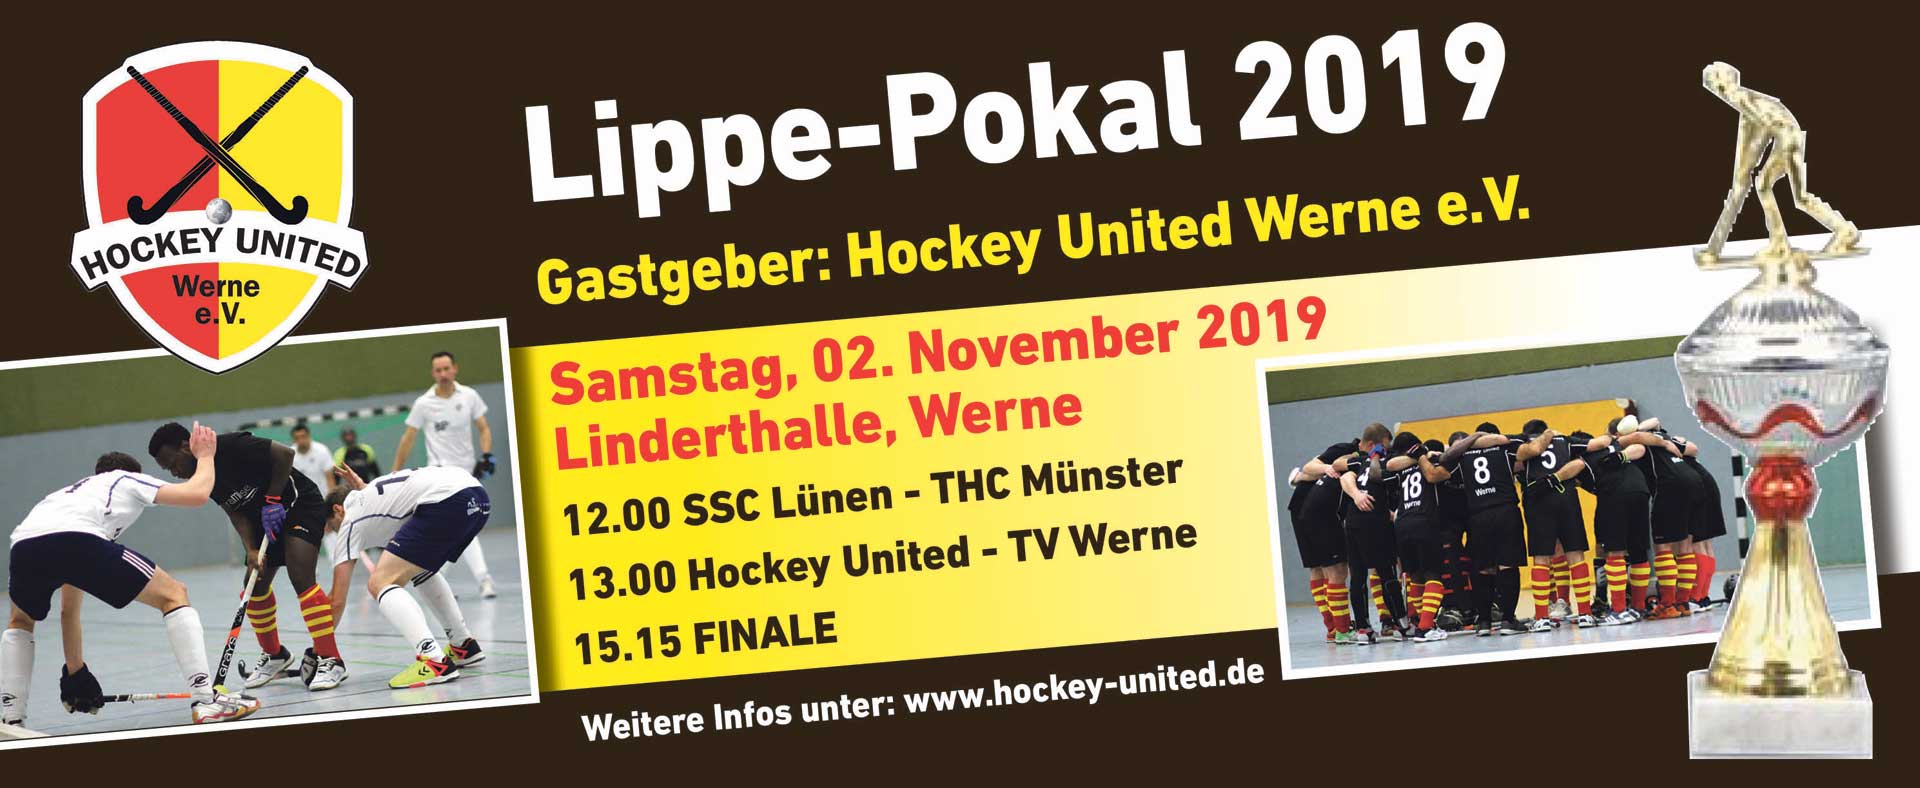 Lippe-Pokal 2019 - Plakat